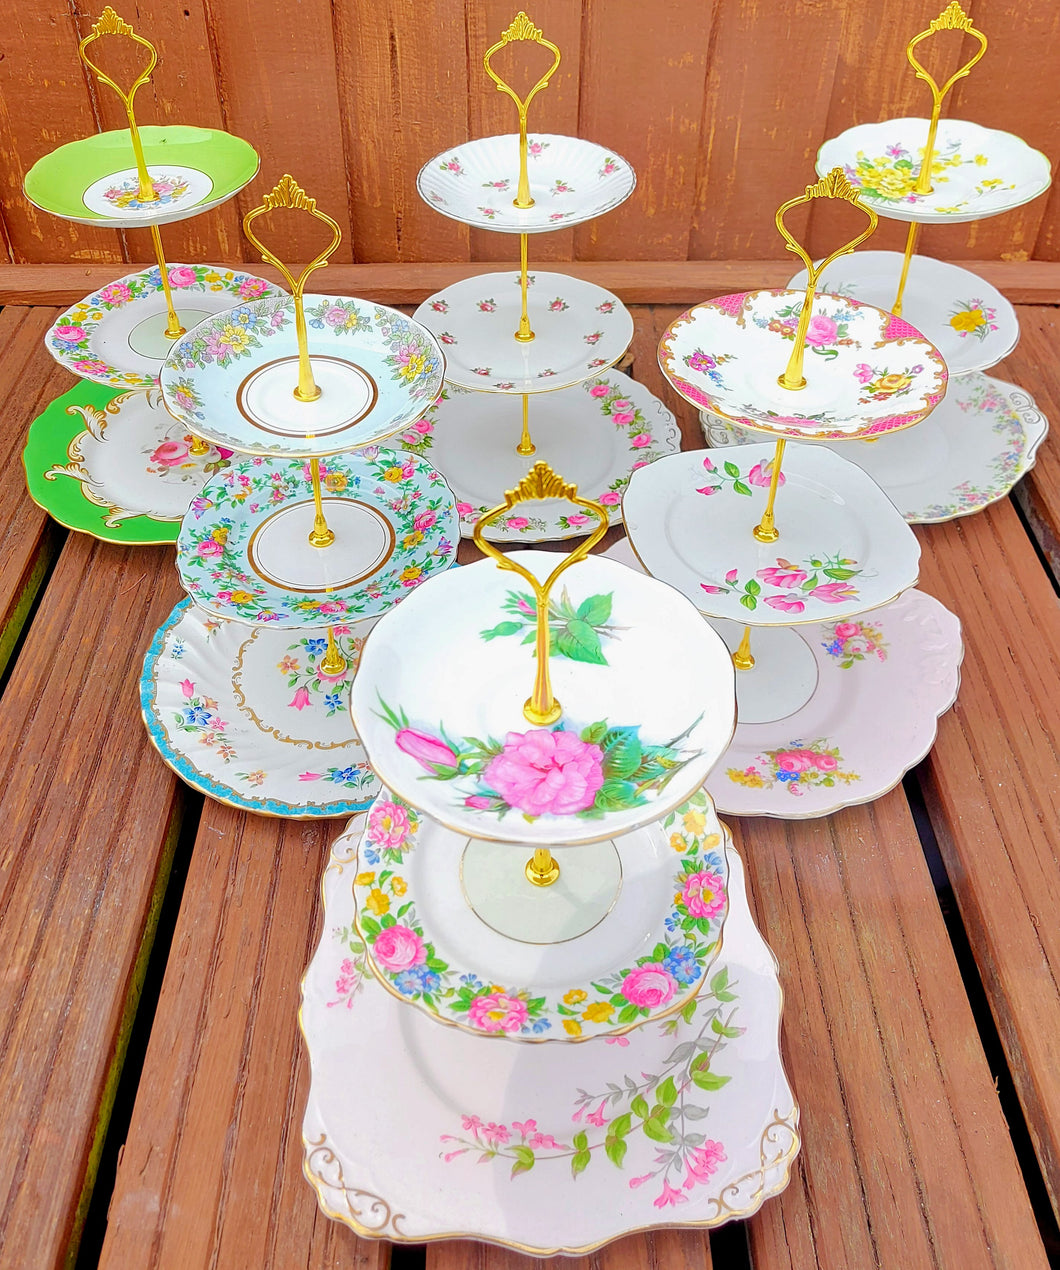 3 (9pcs) x Vintage 3 Tier Mismatched Floral Cake Stands, Afternoon Tea Party Wedding Crockery Bulk Plates Trays